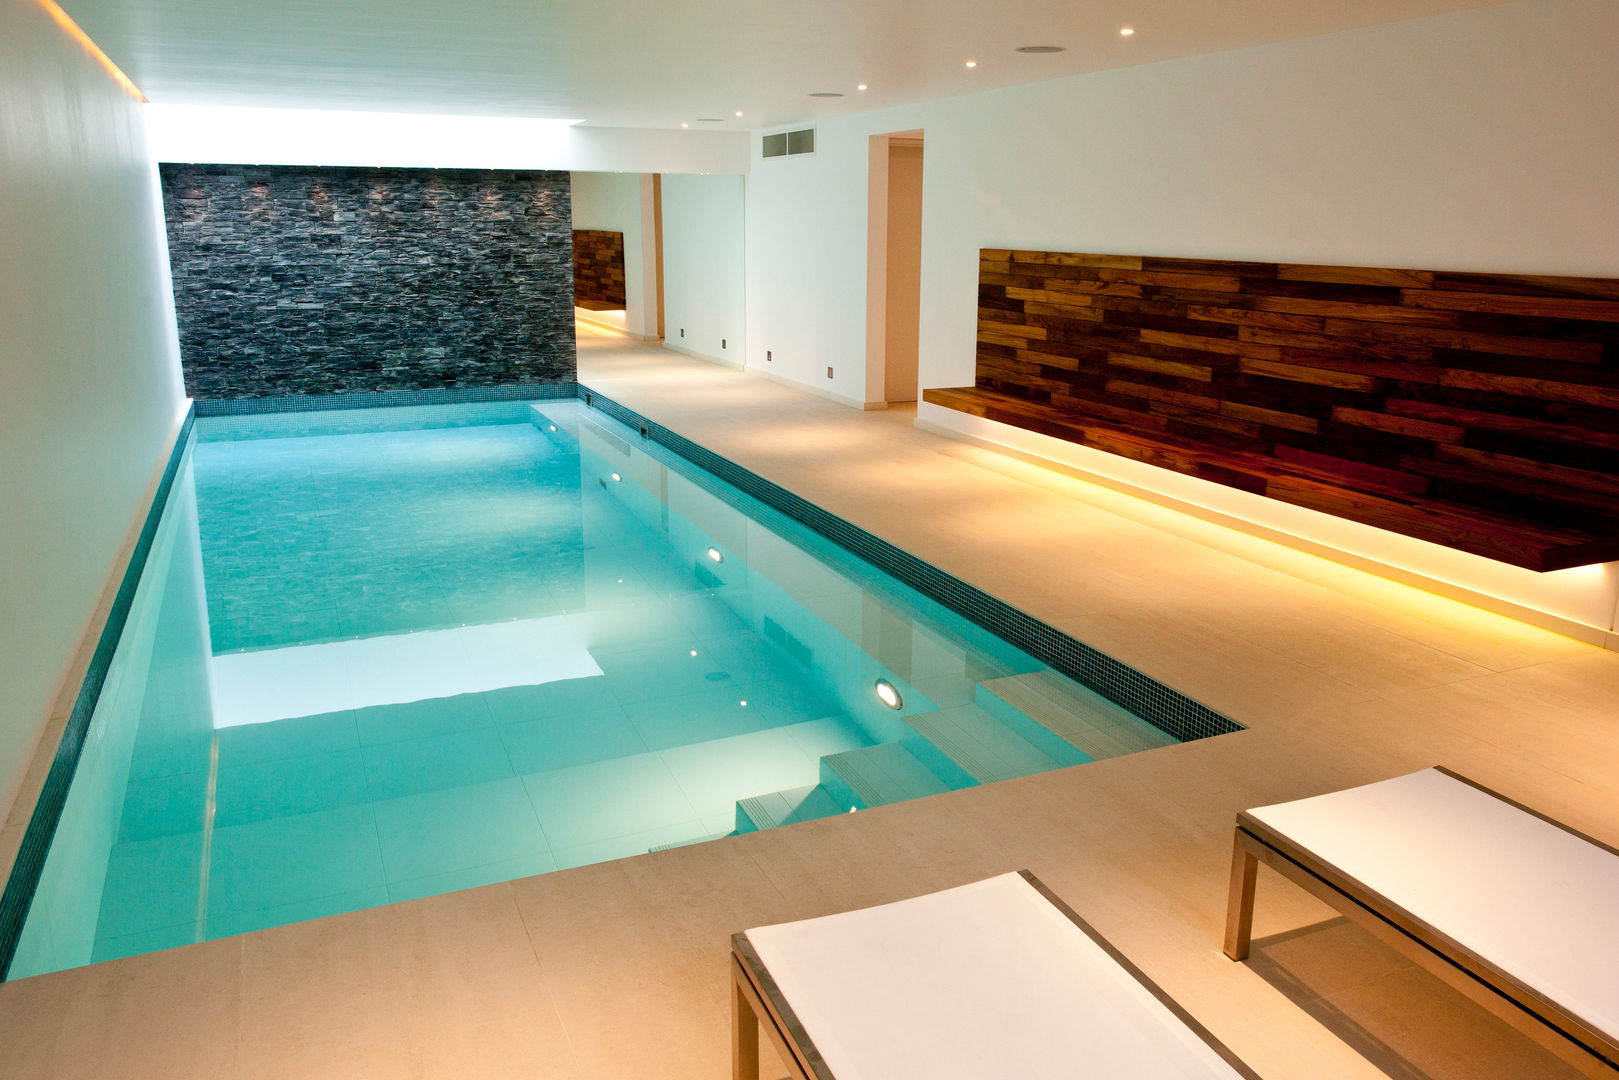 Minimalist Subterranean Pool, London Swimming Pool Company London Swimming Pool Company Piscinas de estilo moderno